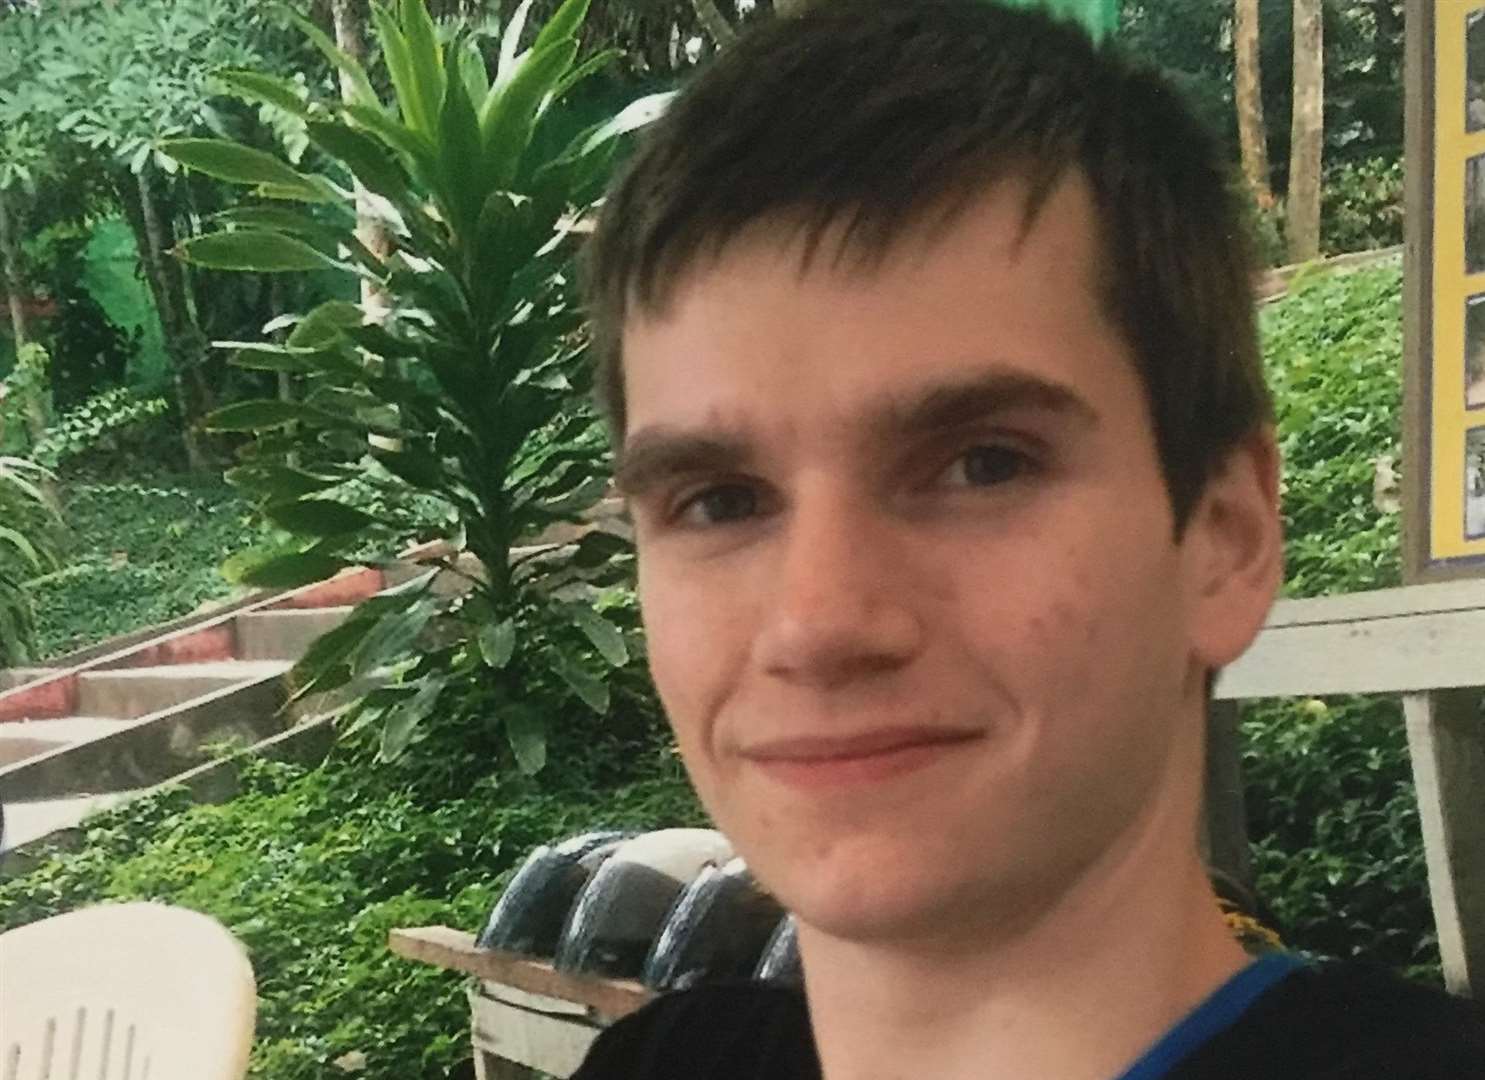 Daniel Whitworth was 21 when he was killed